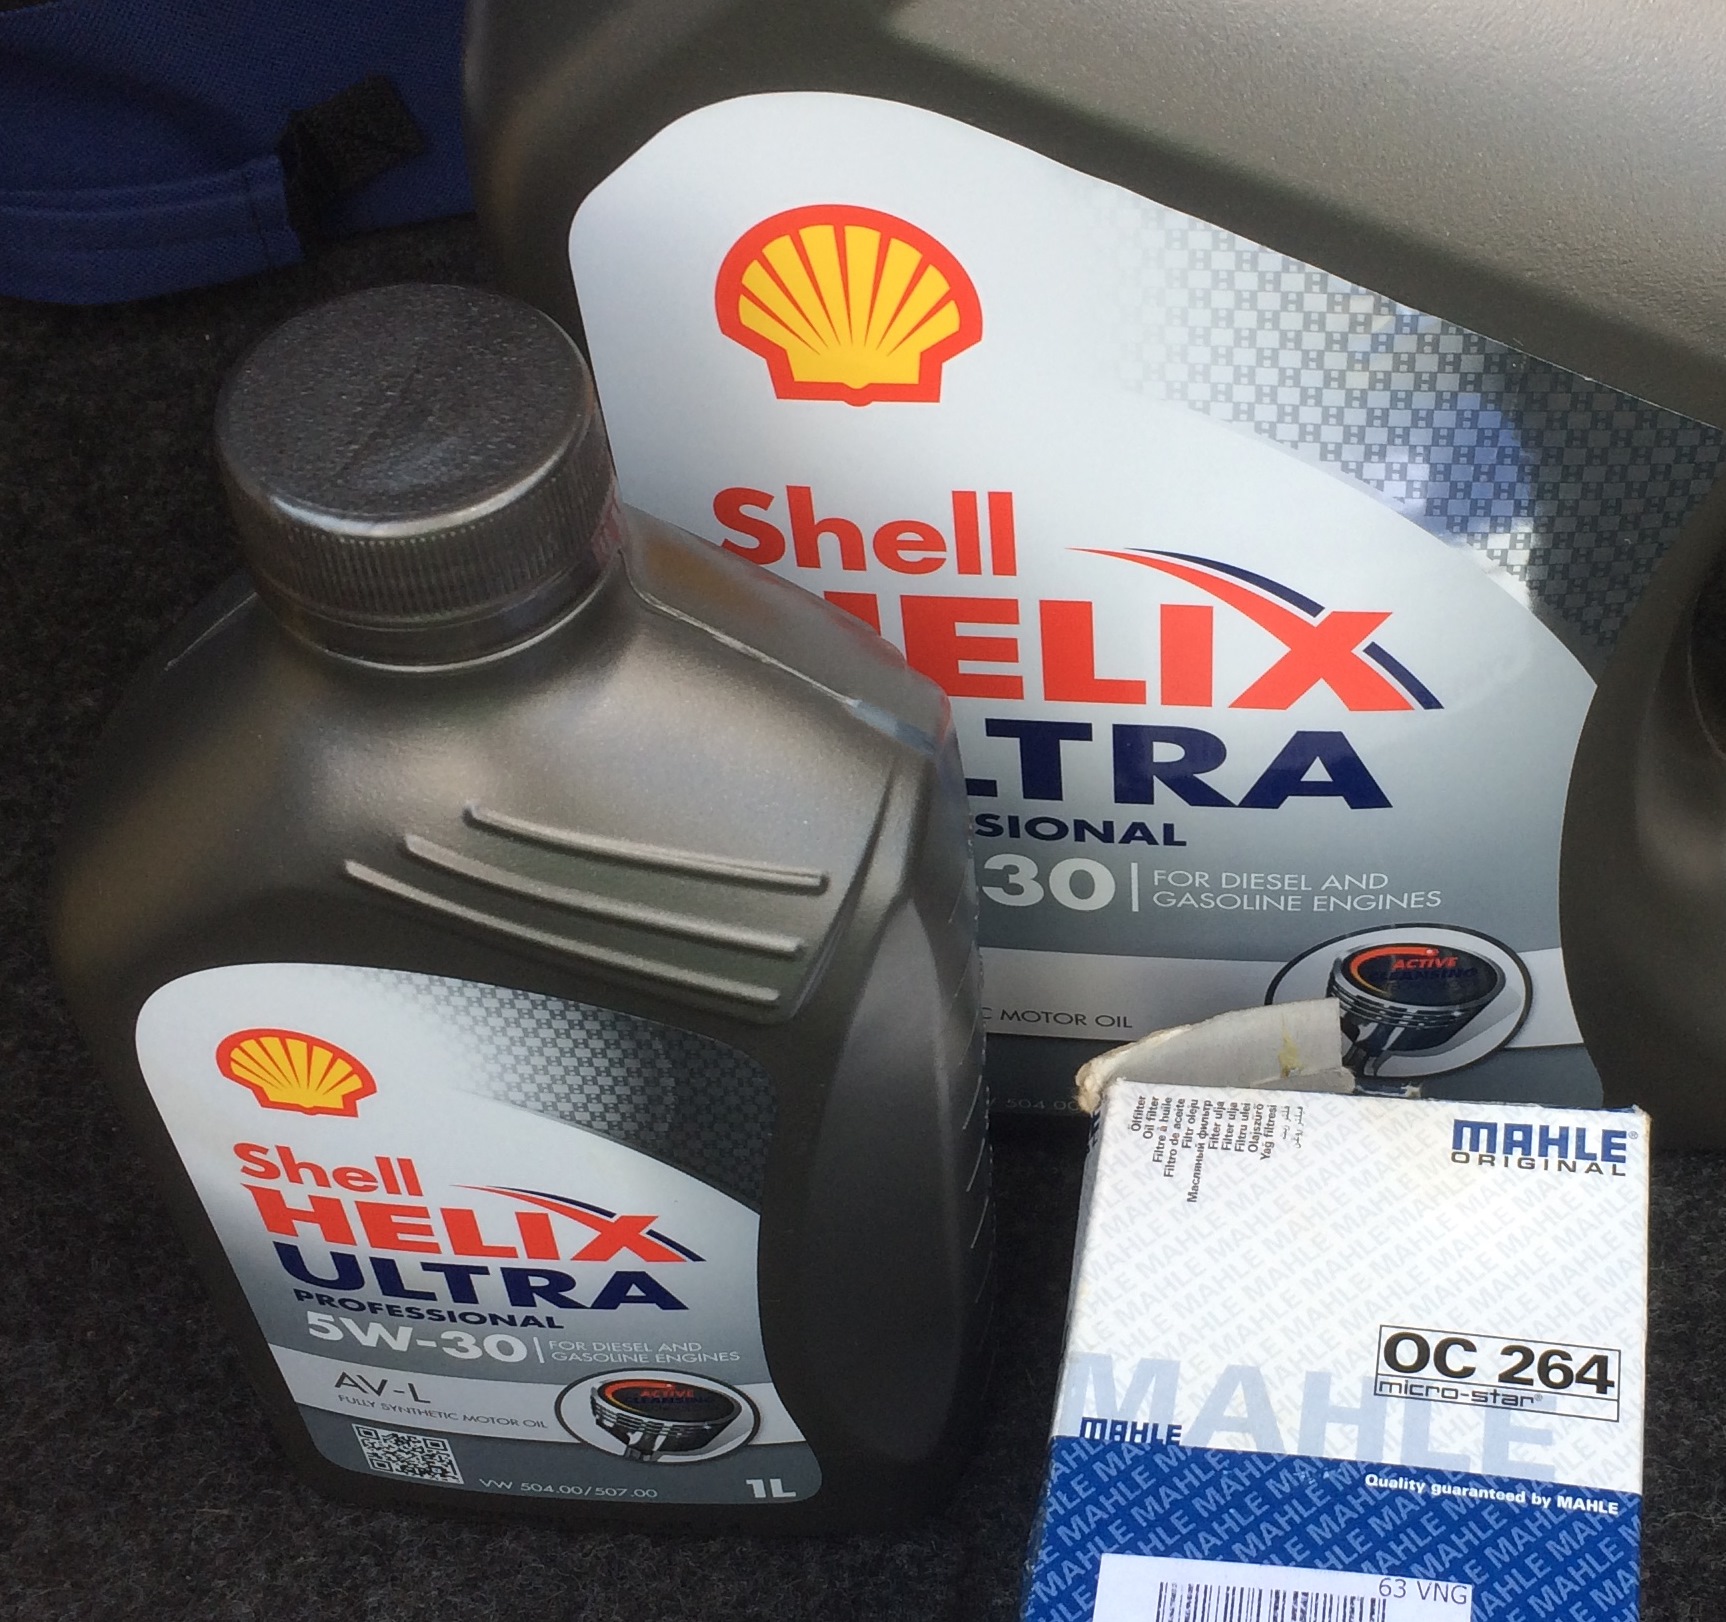 Shell av. Vw504 масло Skoda Octavia Shell. Спецификация масла VW Shell. Масло Шелл на доливку 5 в 30 фото цены.